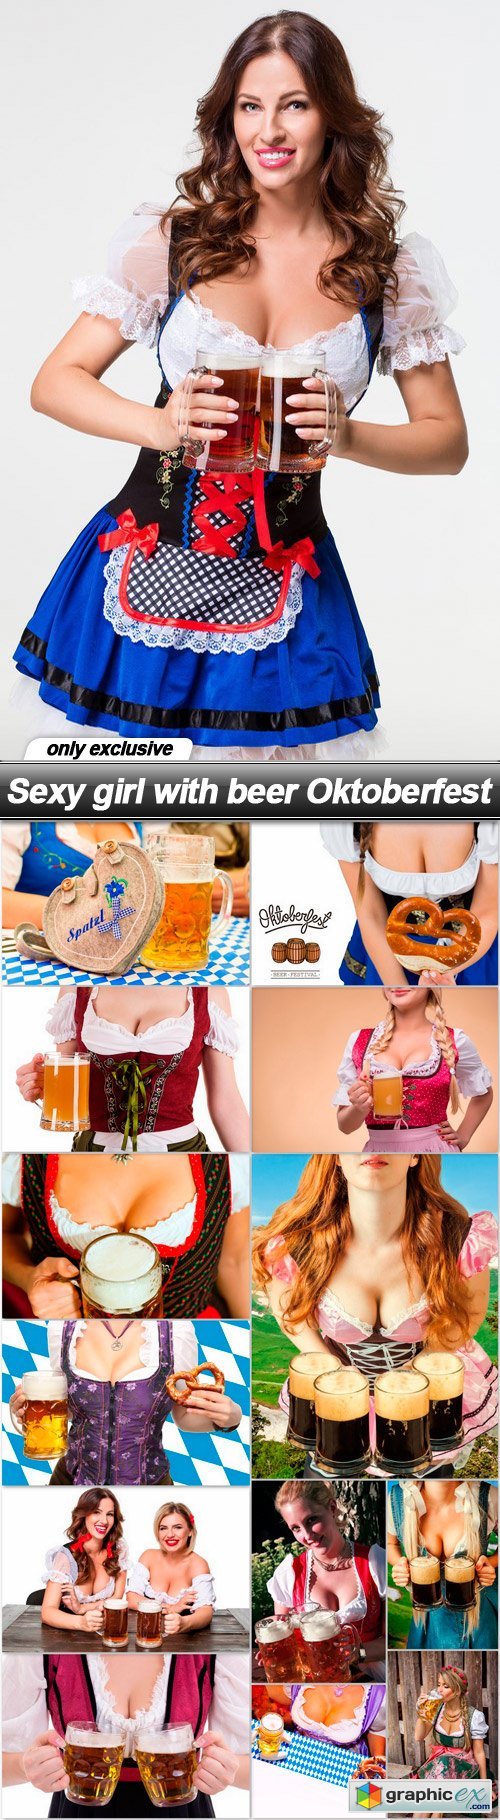 Sexy girl with beer Oktoberfest - 14 UHQ JPEG